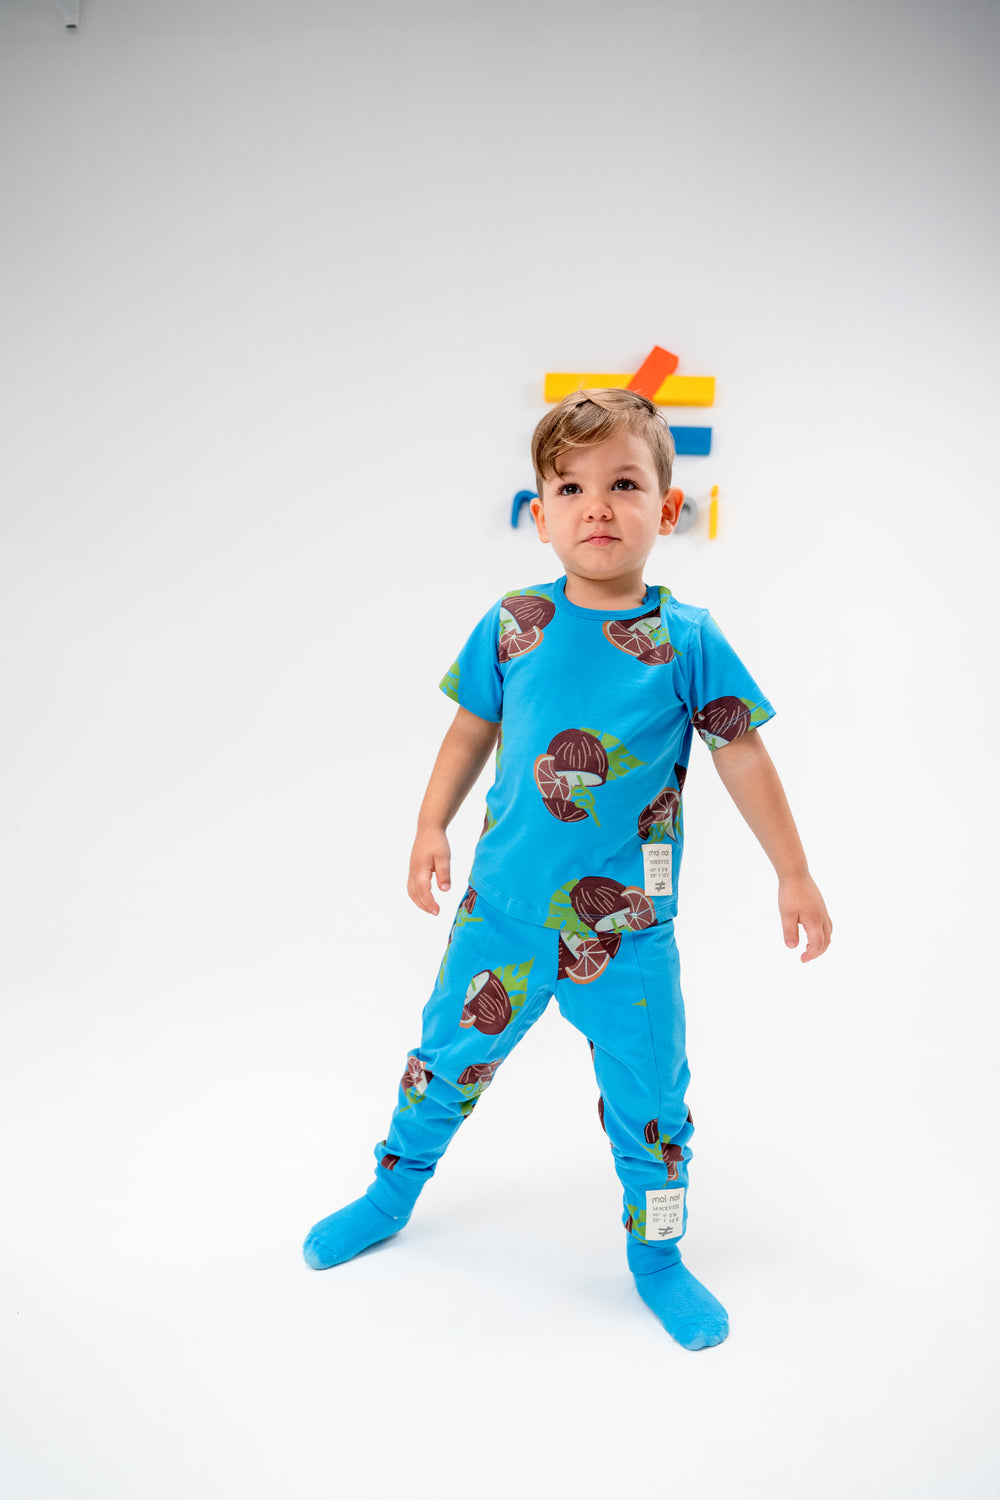 kids-atelier-moi-noi-gender-neutral-kid-baby-girl-boy-multicolor-plaid-print-outfit-mn5165-plaid